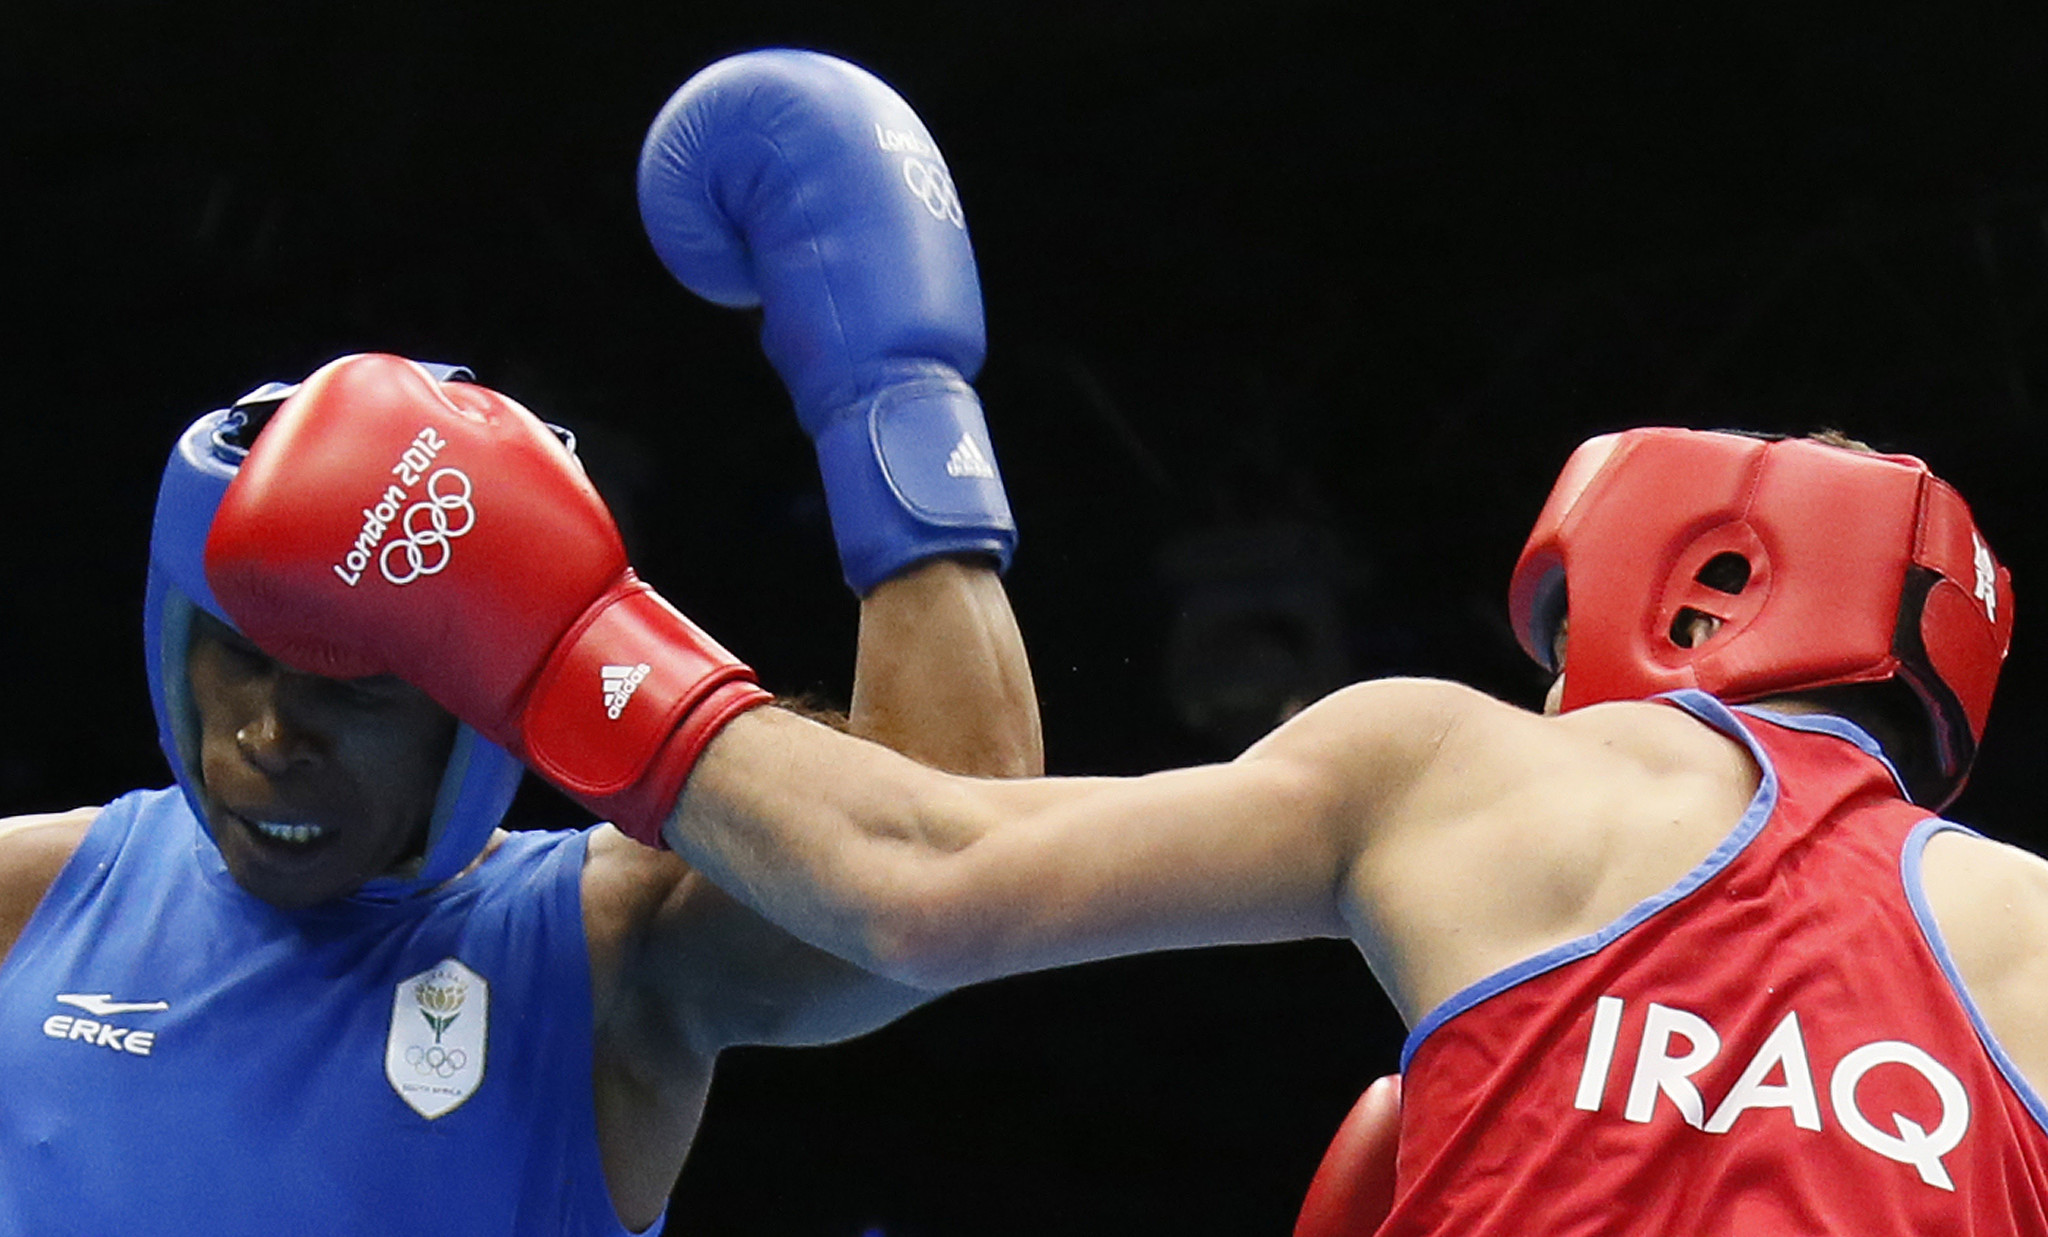 Iraq and Kuwait to collaborate on future boxing programmes